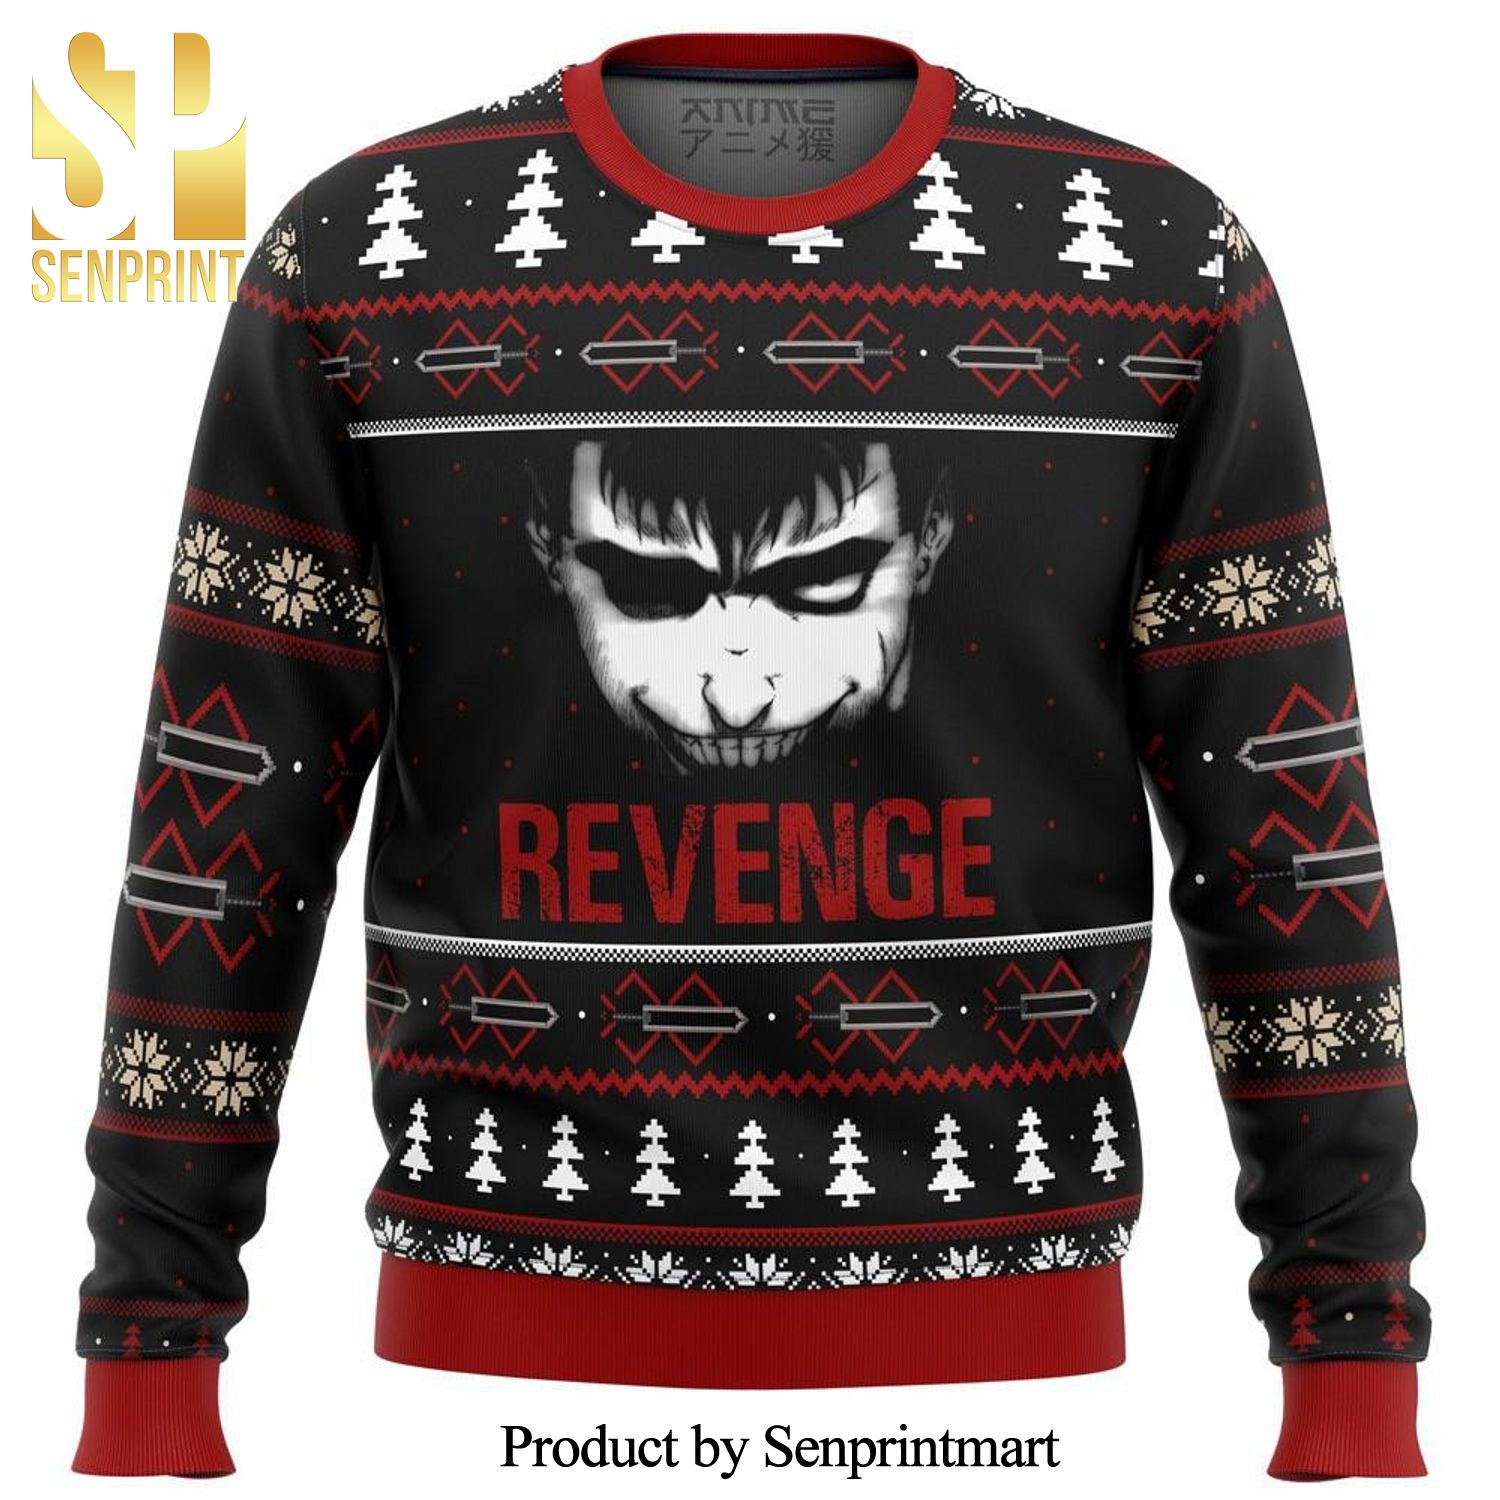 Berserk Revenge Premium Manga Anime Knitted Ugly Christmas Sweater